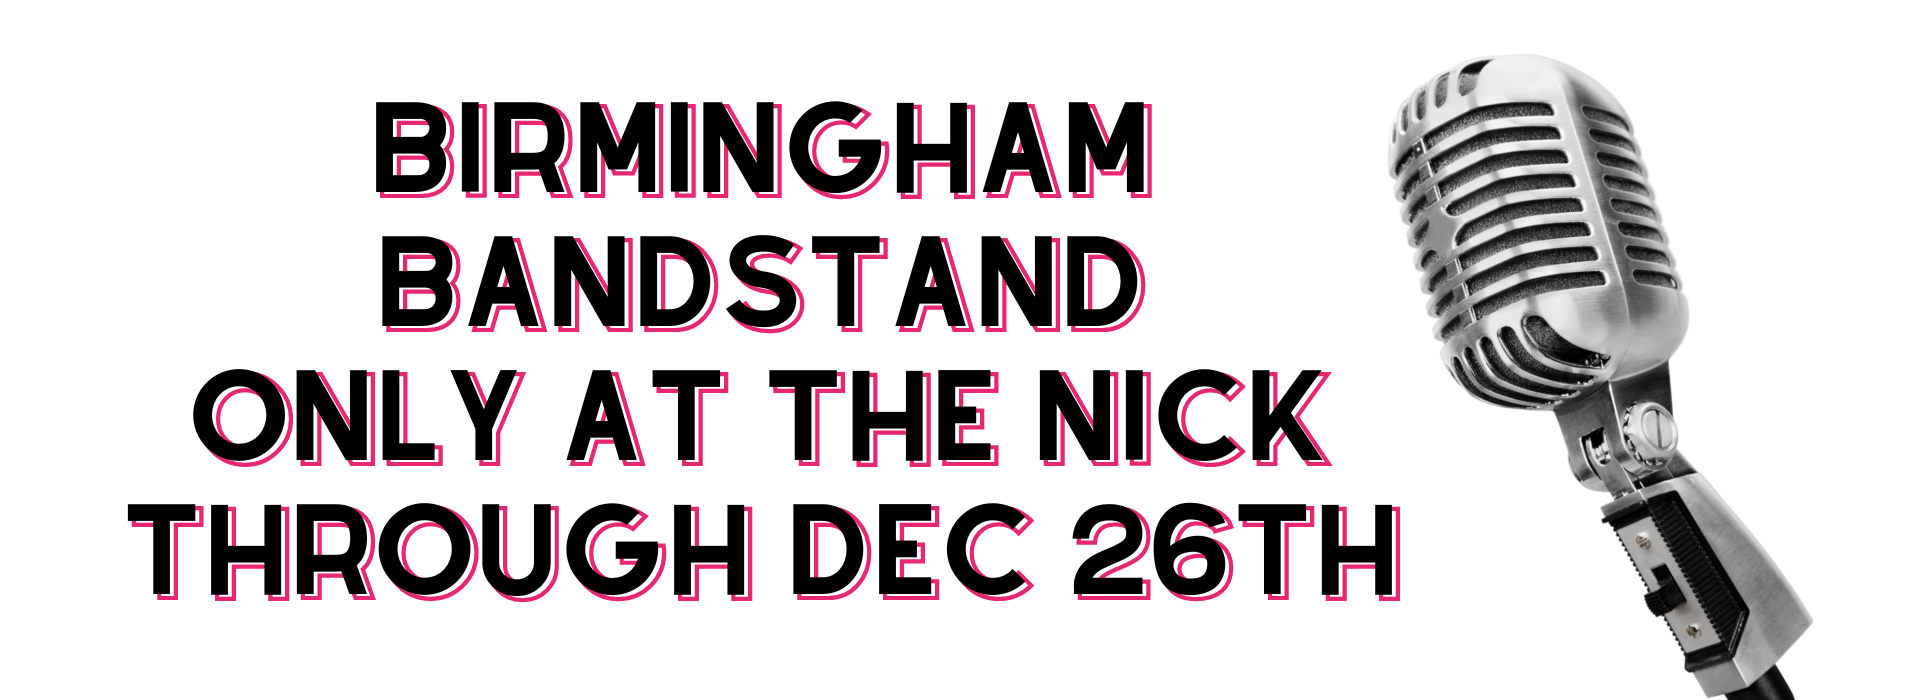 Birmingham Bandstand